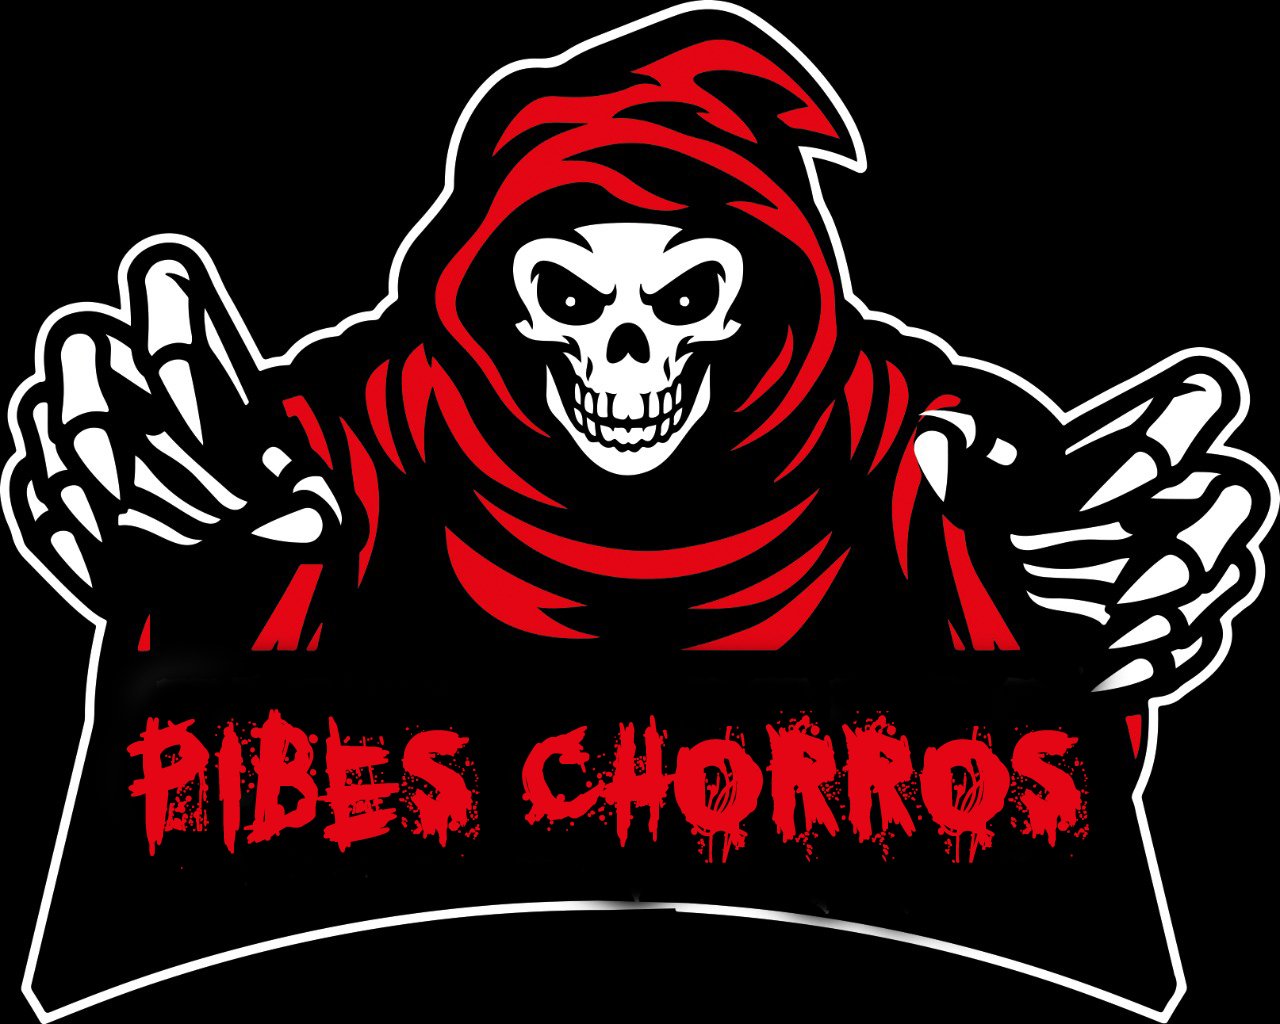 Los pibes chorros / The thieve's kids